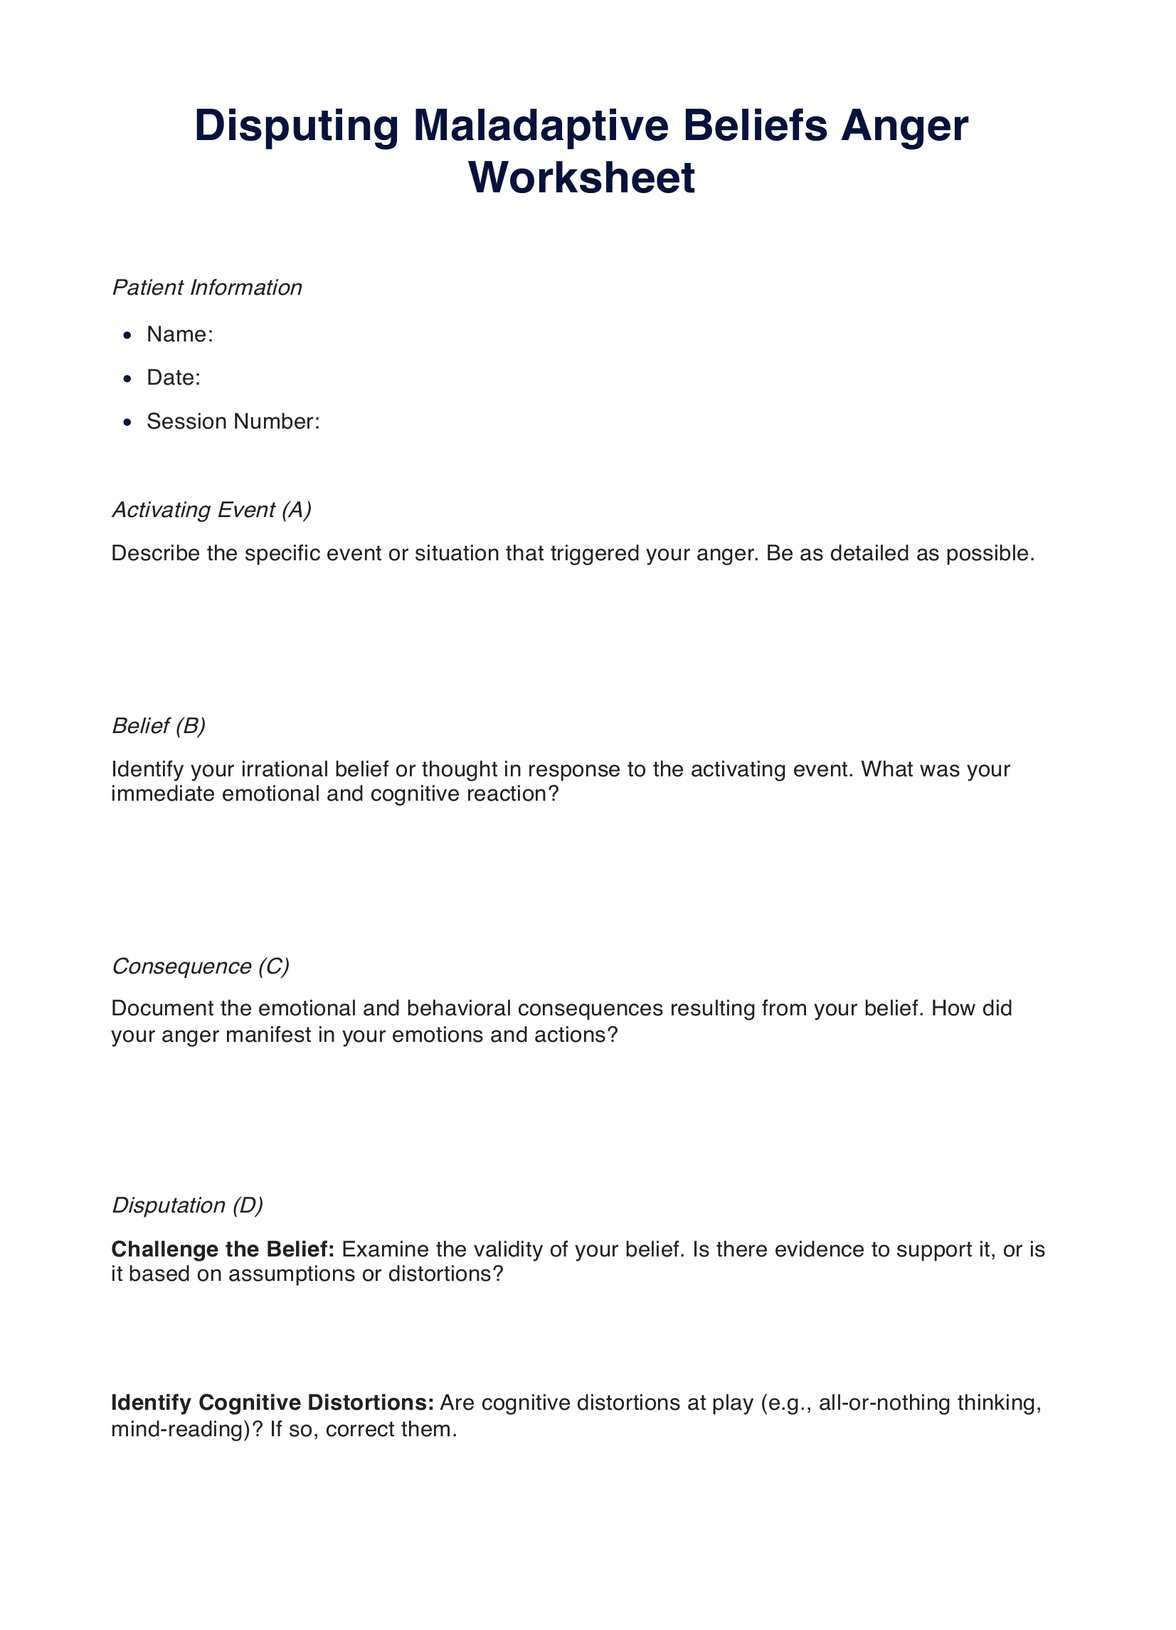 Disputing Maladaptive Beliefs Anger Worksheet PDF Example